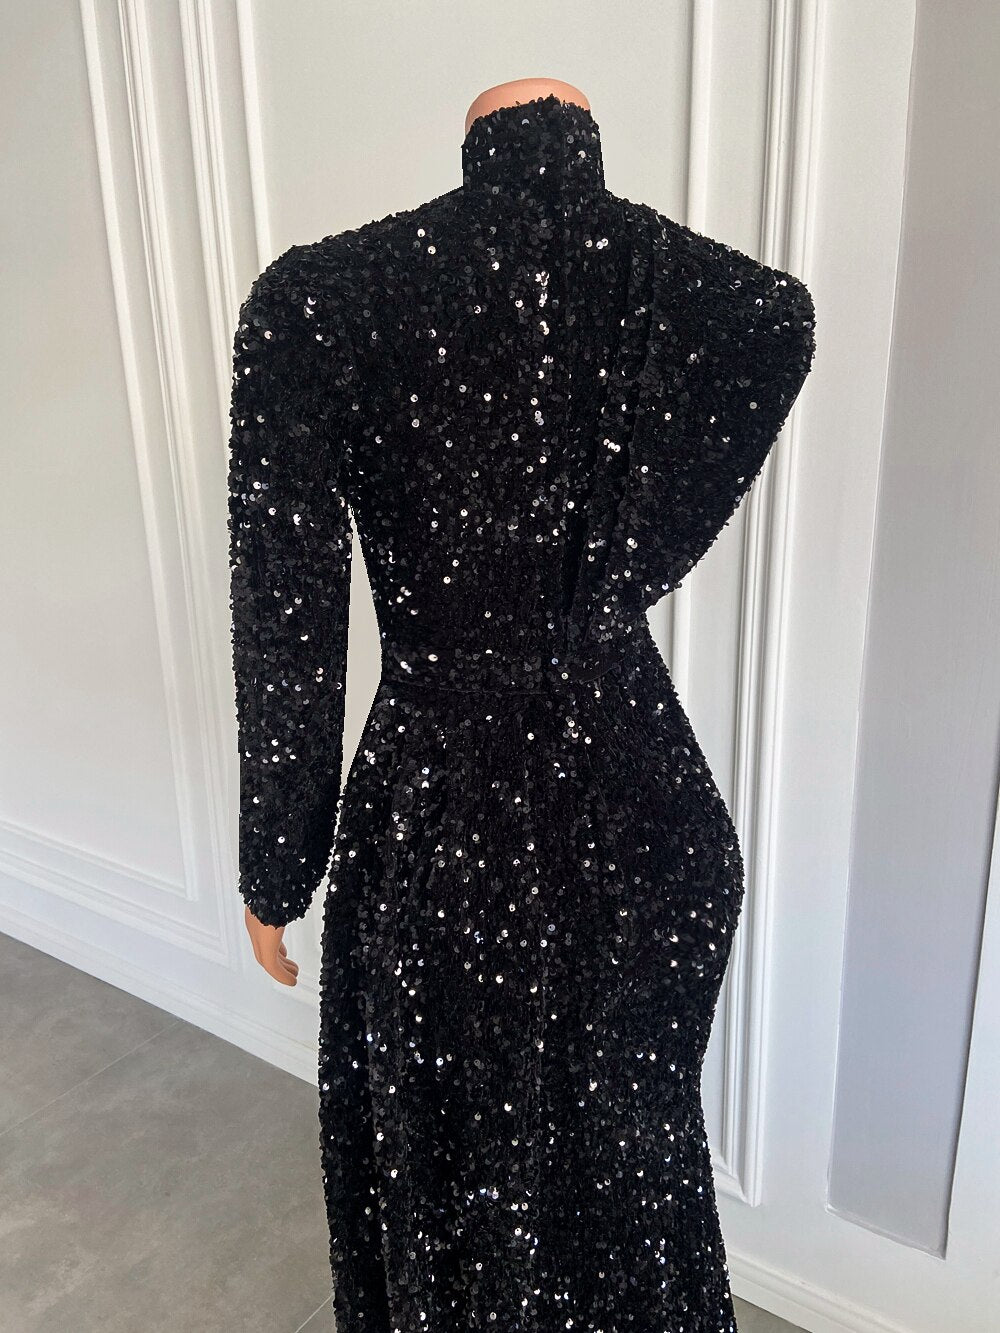 Single Long Sleeve Sheer Mesh Sparkly Black Sequined Girls Prom Dresses